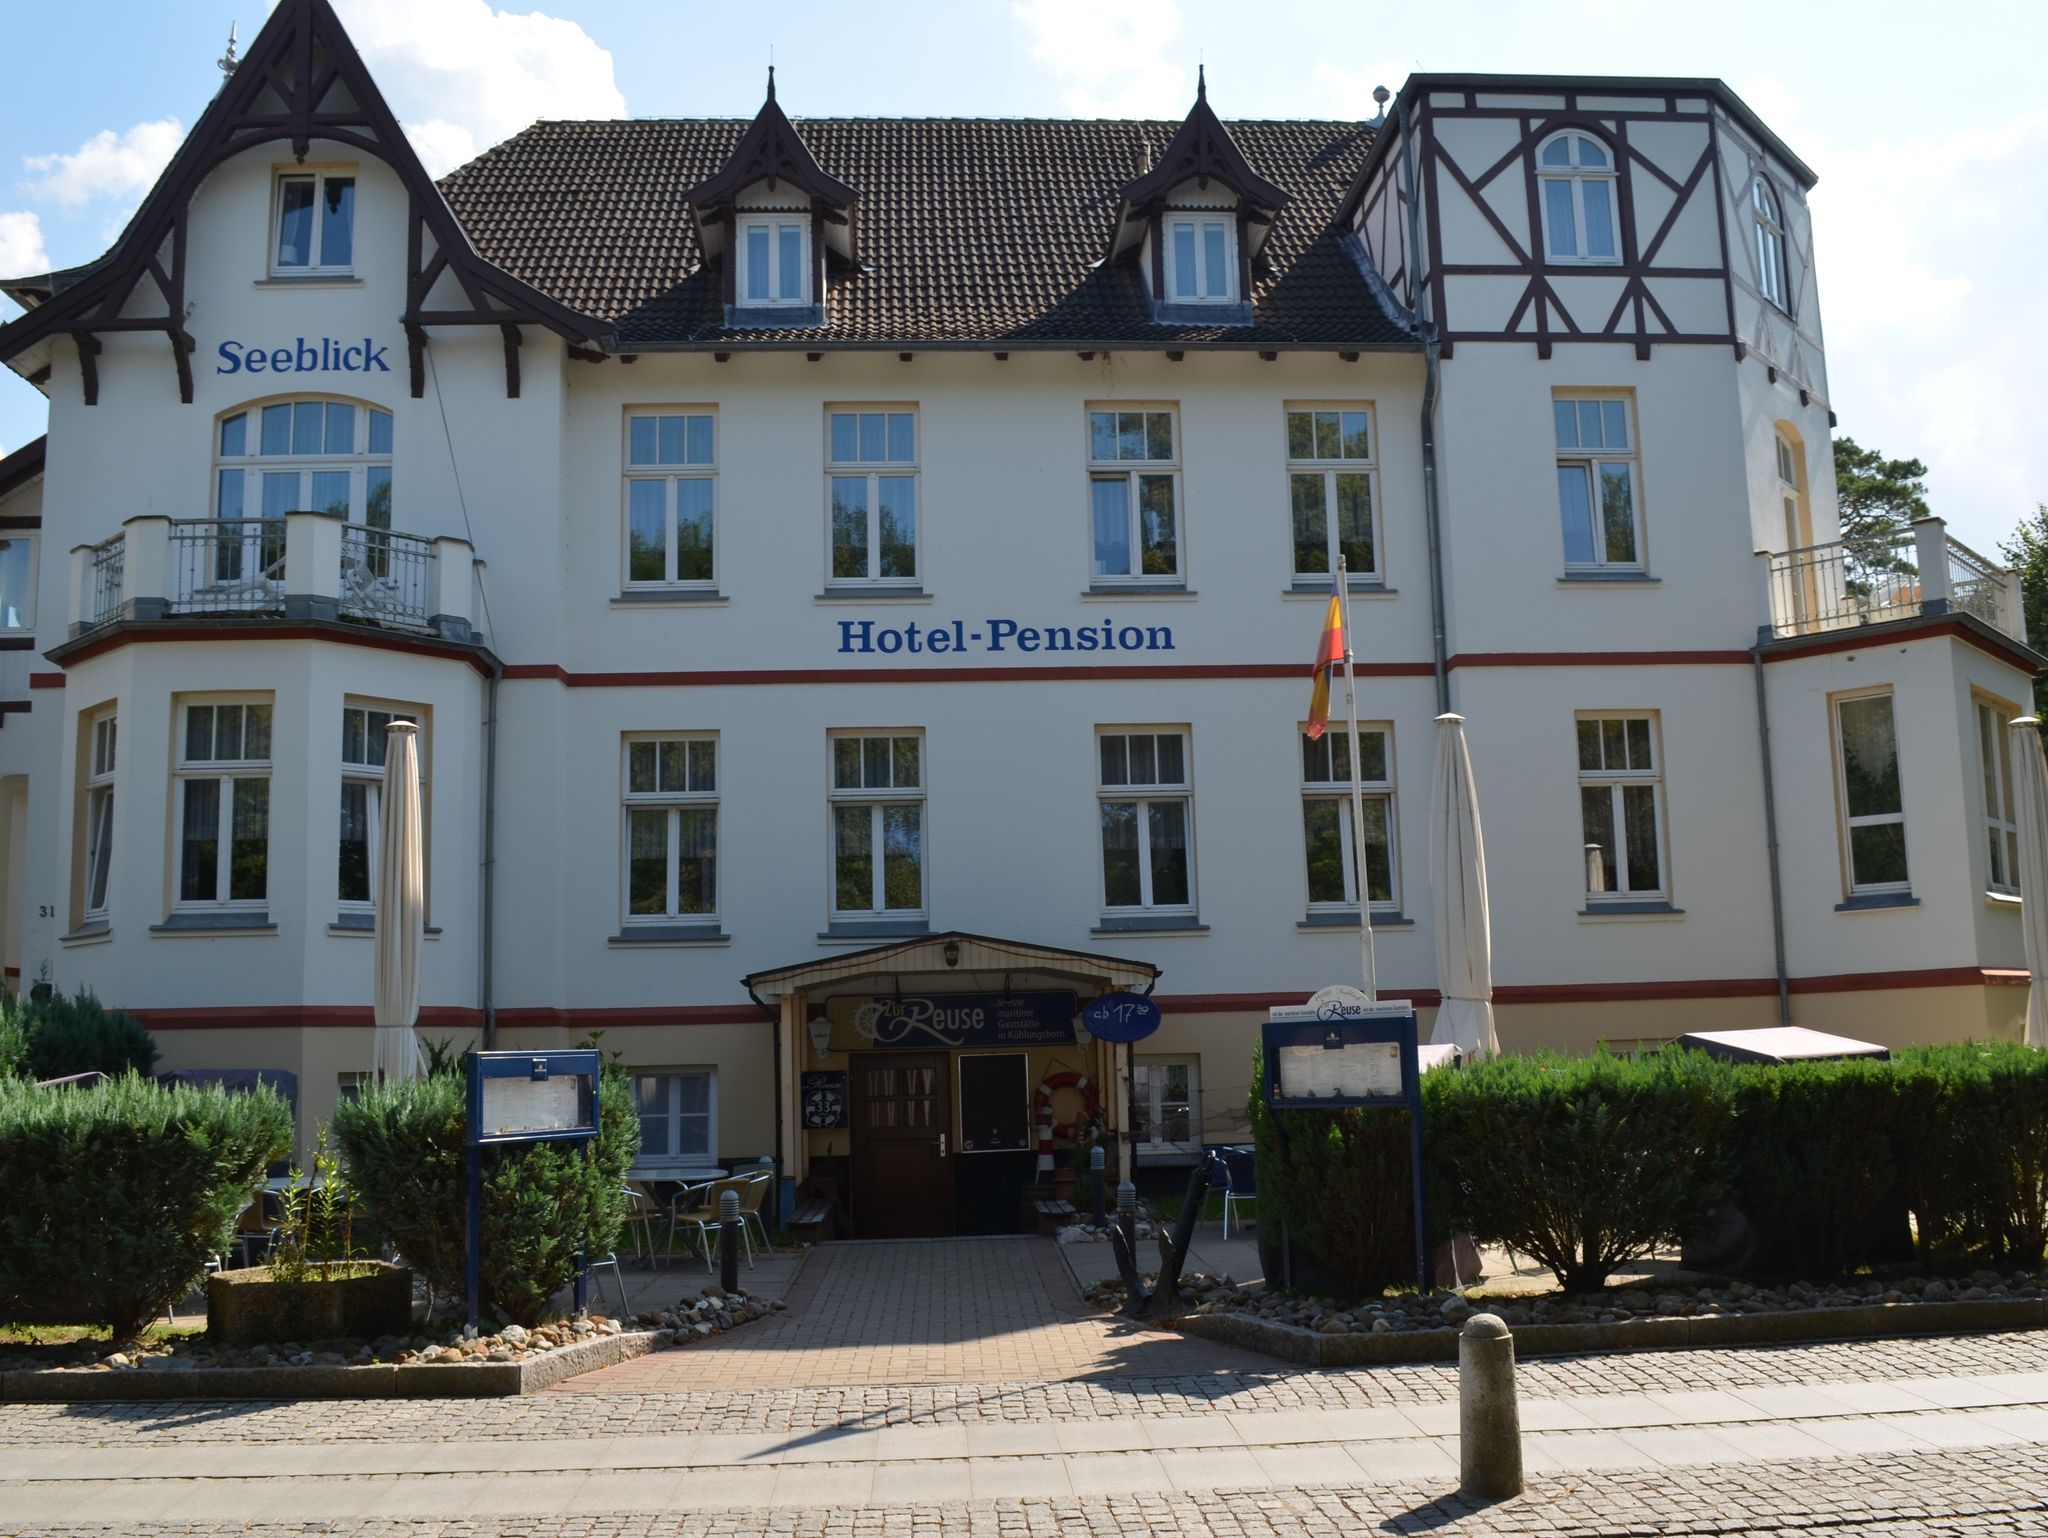 Hotel Pension Seeblick